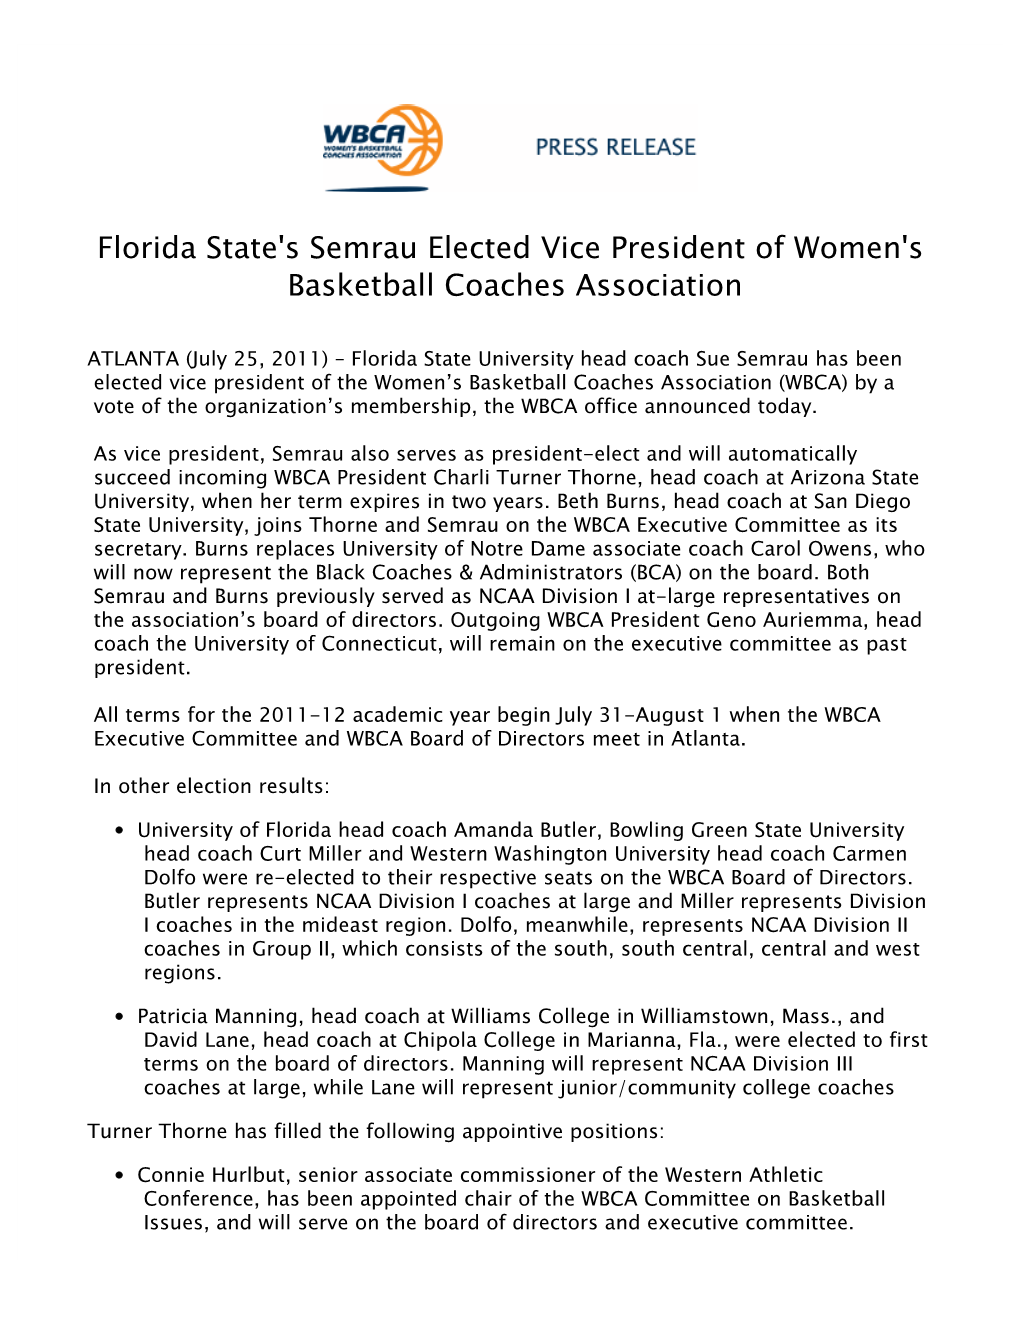 Florida State's Semrau Elected Vice President of Women's Basketball Coaches Association